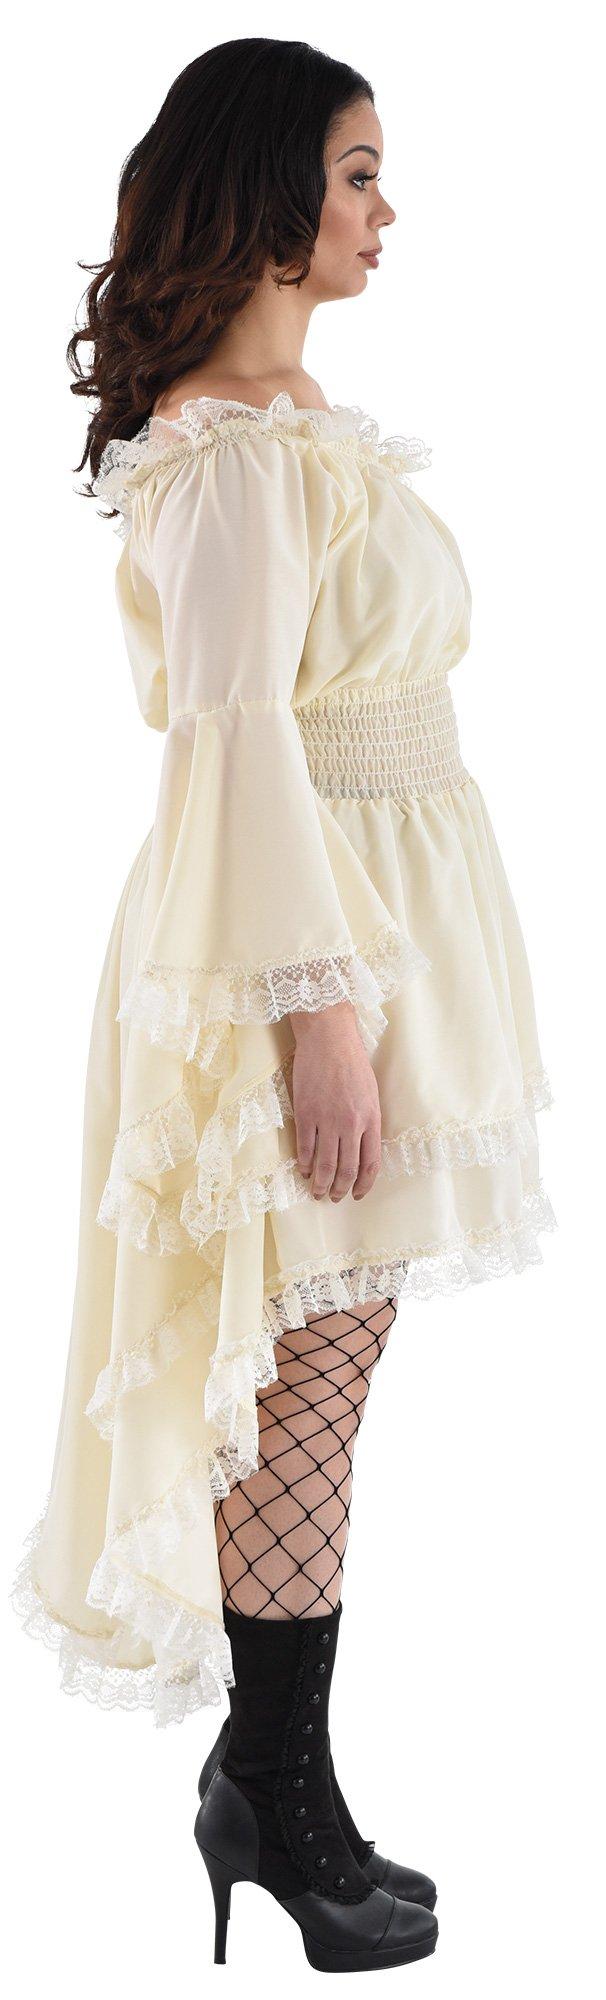 Adult Cream Pirate Dress